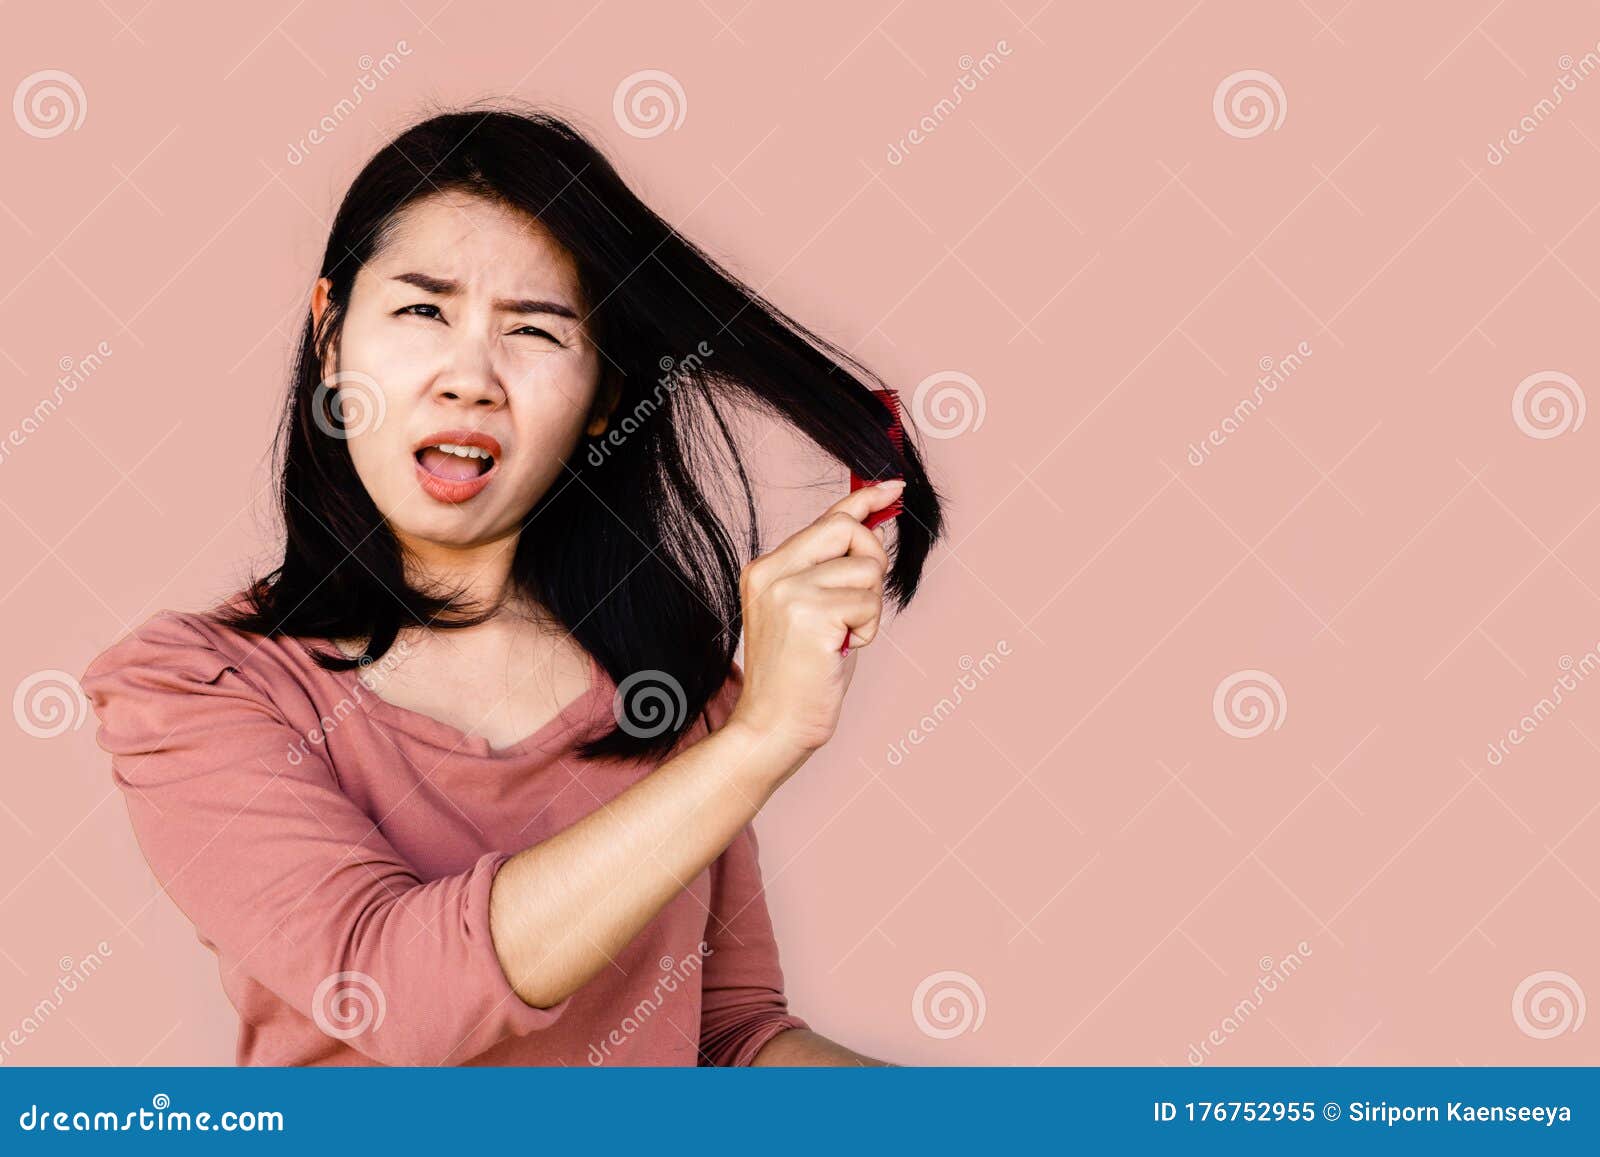 asian woman using comp brushing her dry damaged long hair